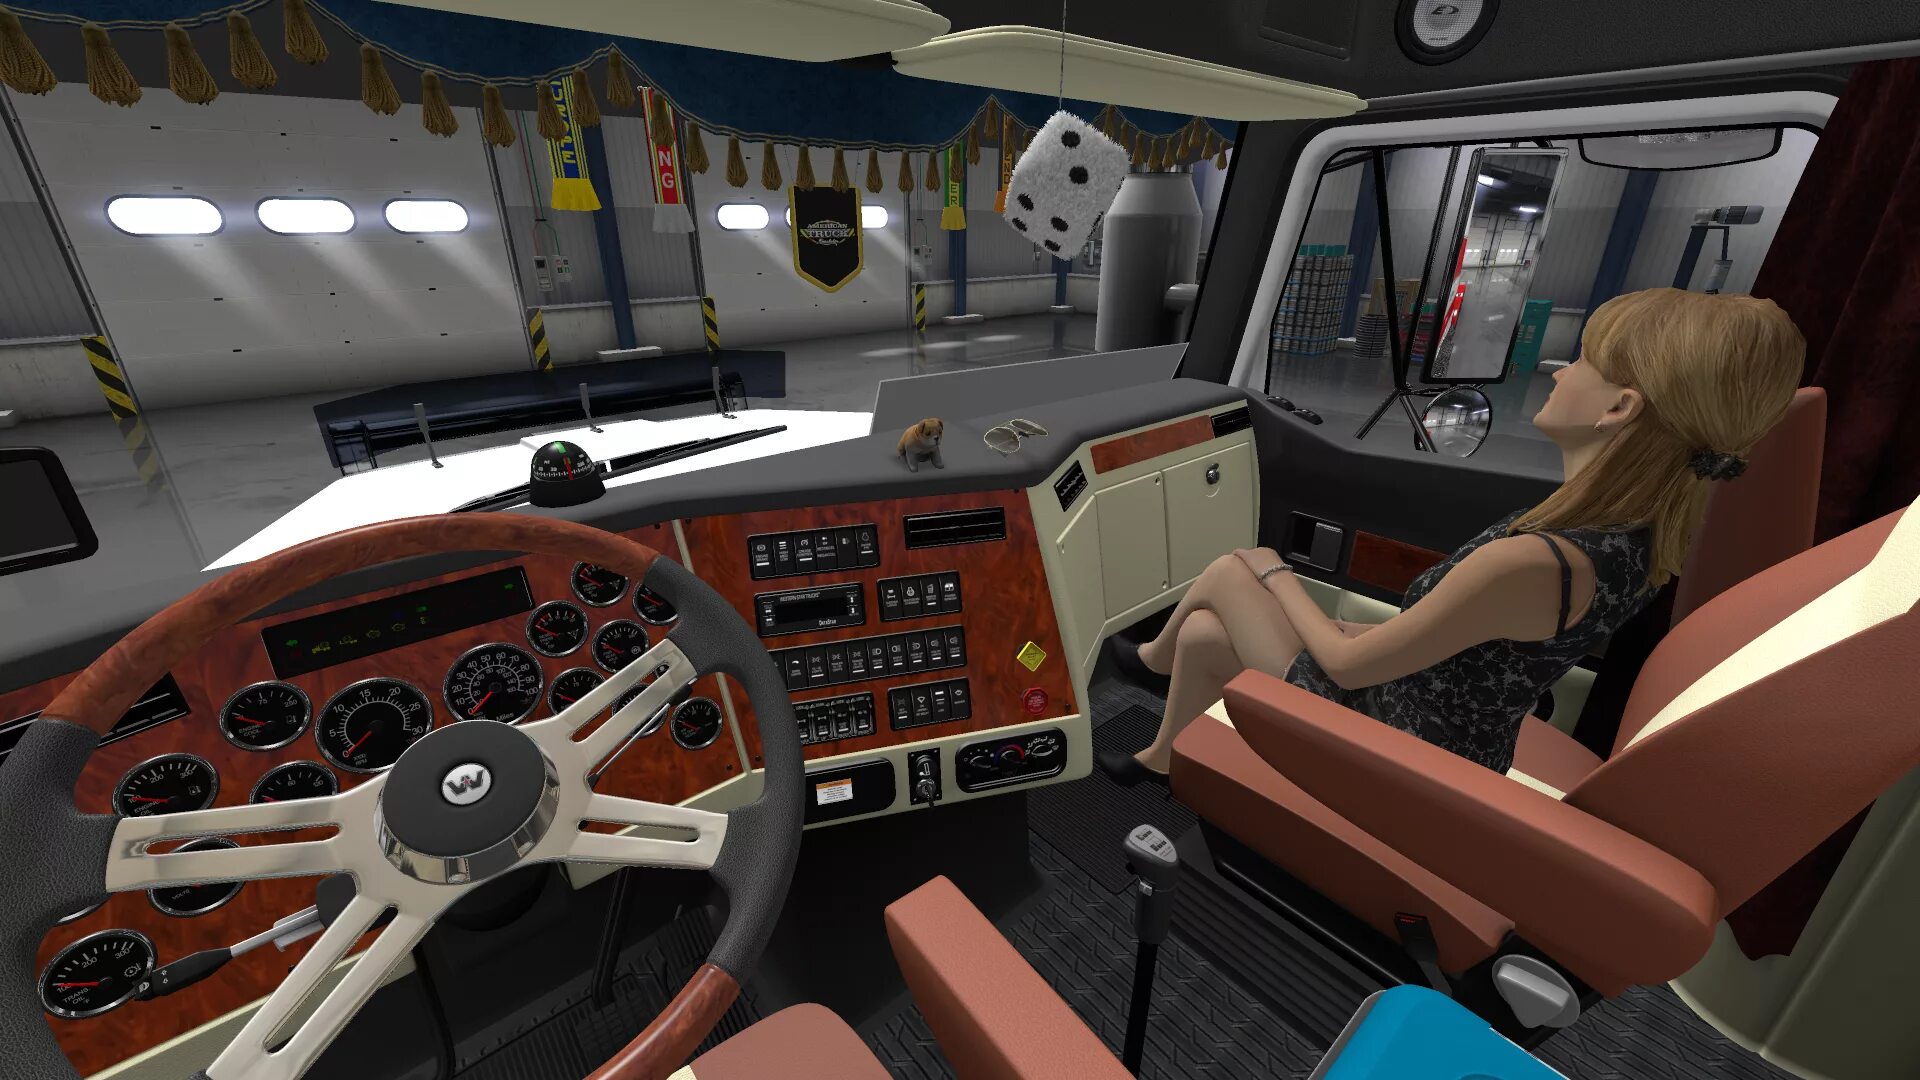 Simulator v 2.0. Евро трак симулятор 2 кабина. ДЛС кабин аксессуары для етс 2. American Truck Simulator кабина. DLC аксессуары Cabin ETS 2 1.39.